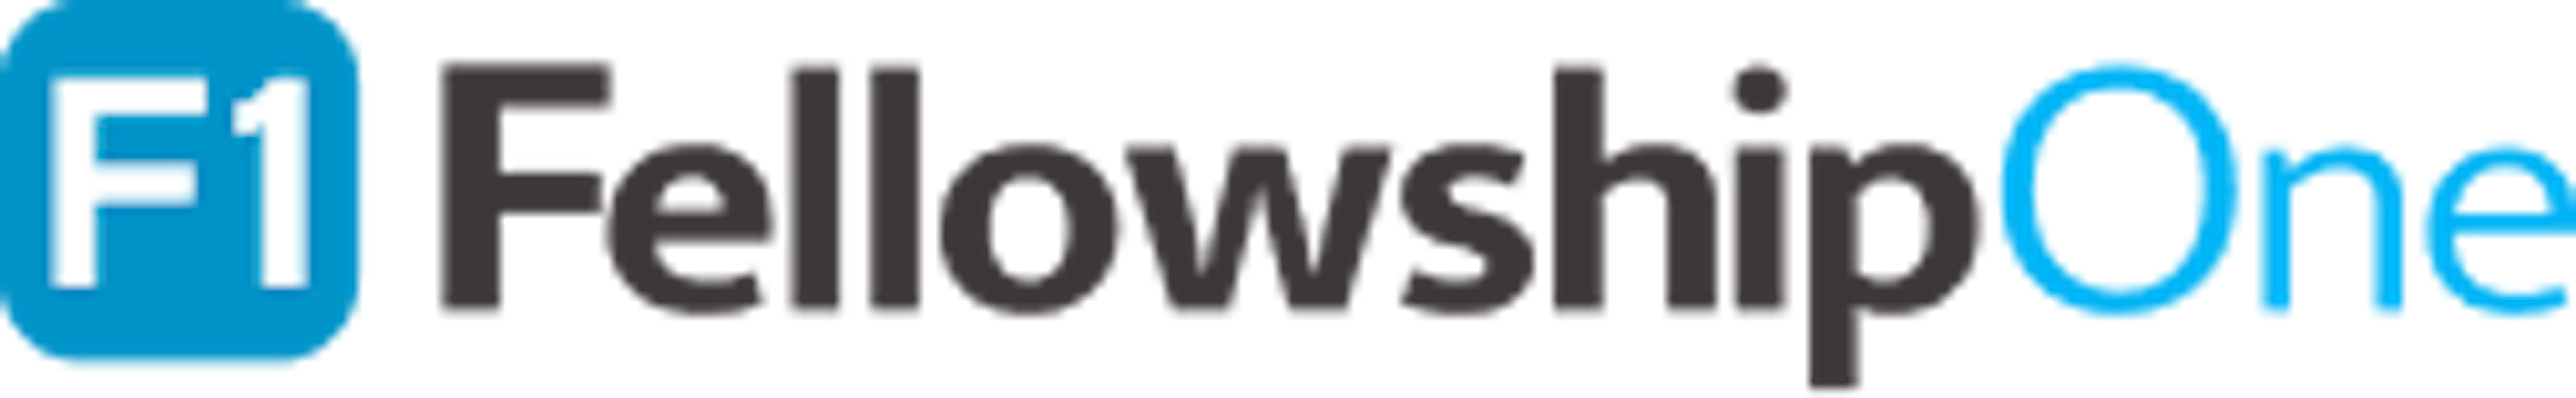 FellowshipOne Logo